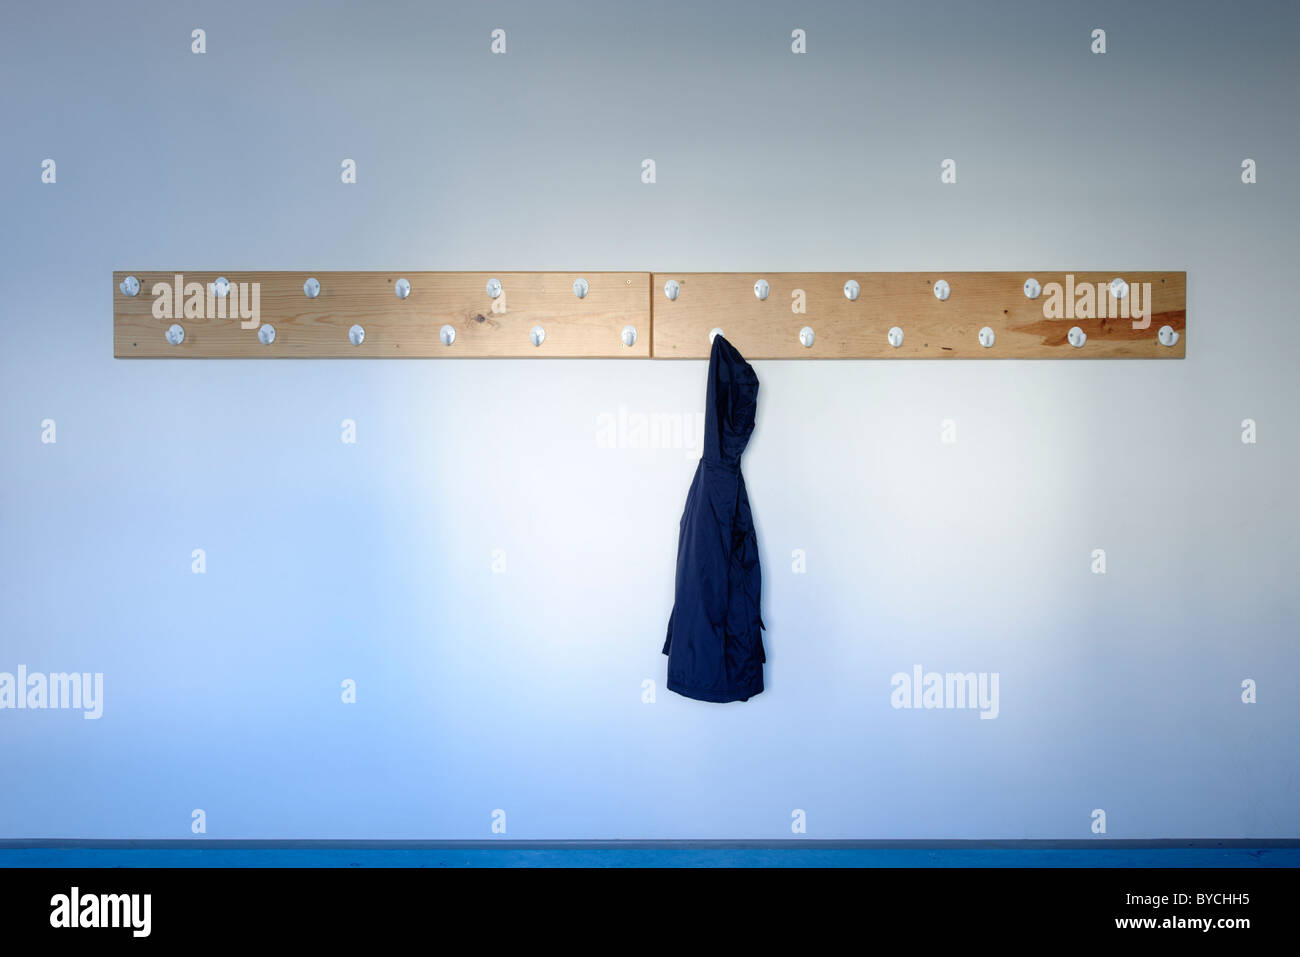 School cloak room with blue coat hanging Stock Photo